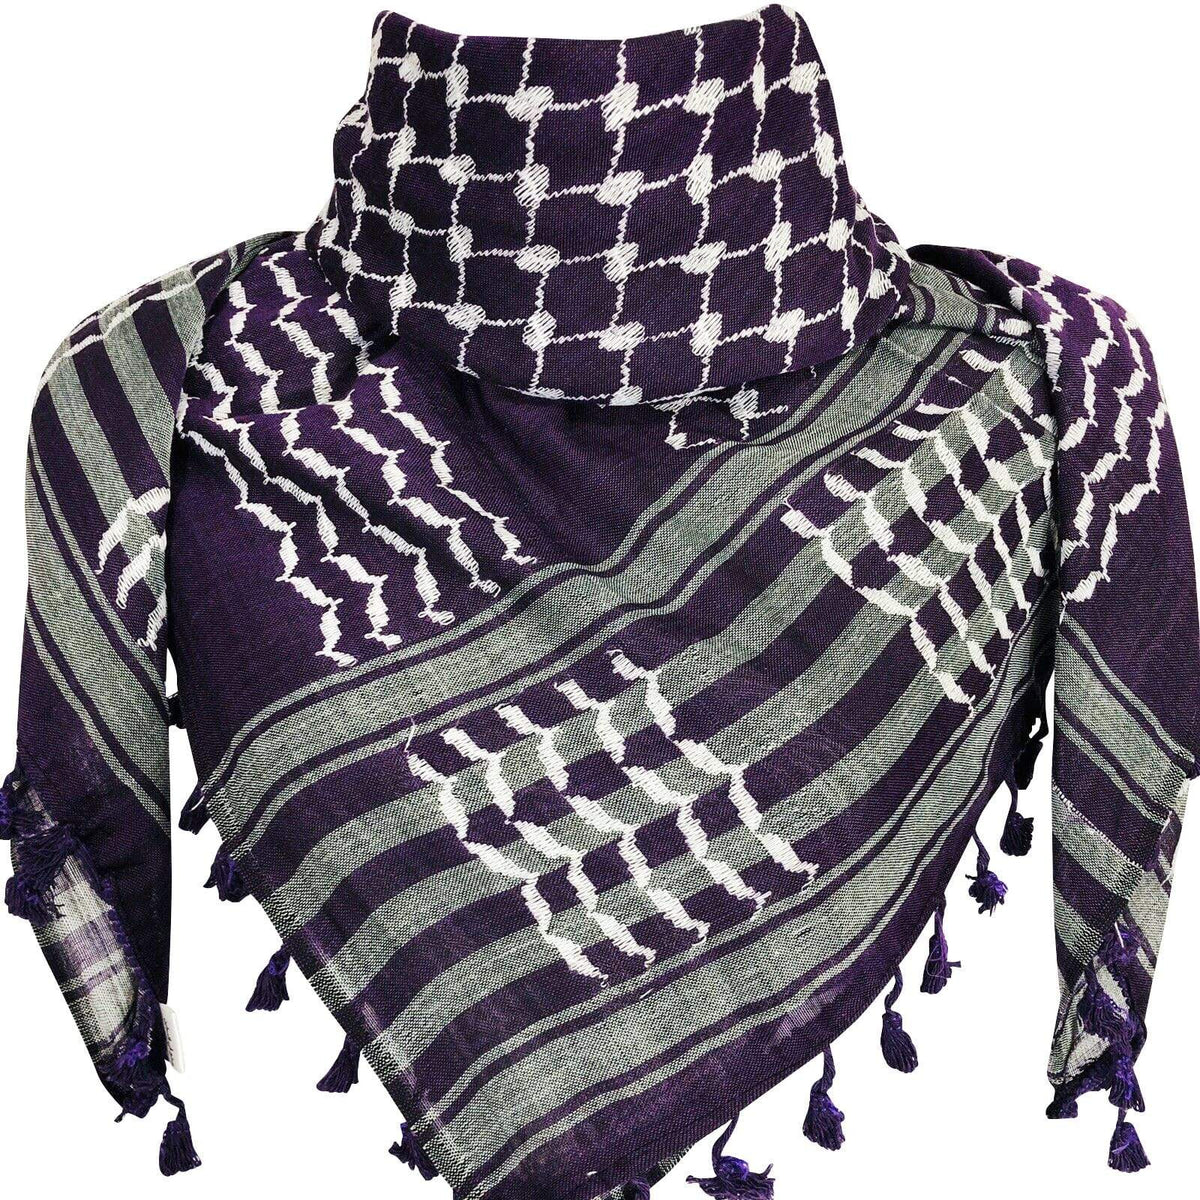 Colorful On Purple - Palestine scarf – The Original Keffiyeh